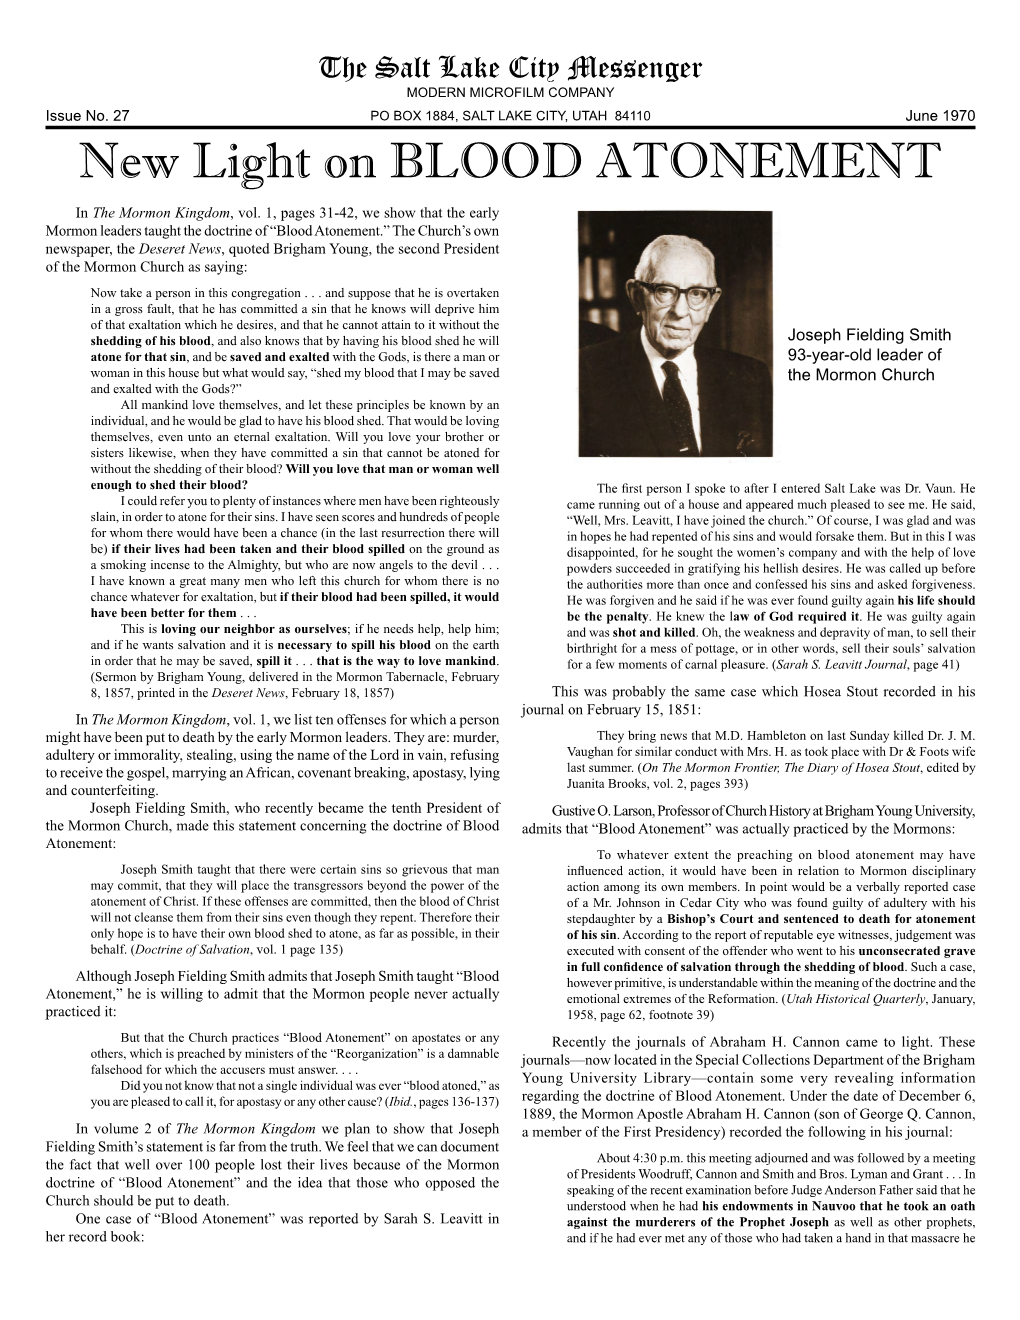 27 Salt Lake City Messenger: New Light on Blood Atonement